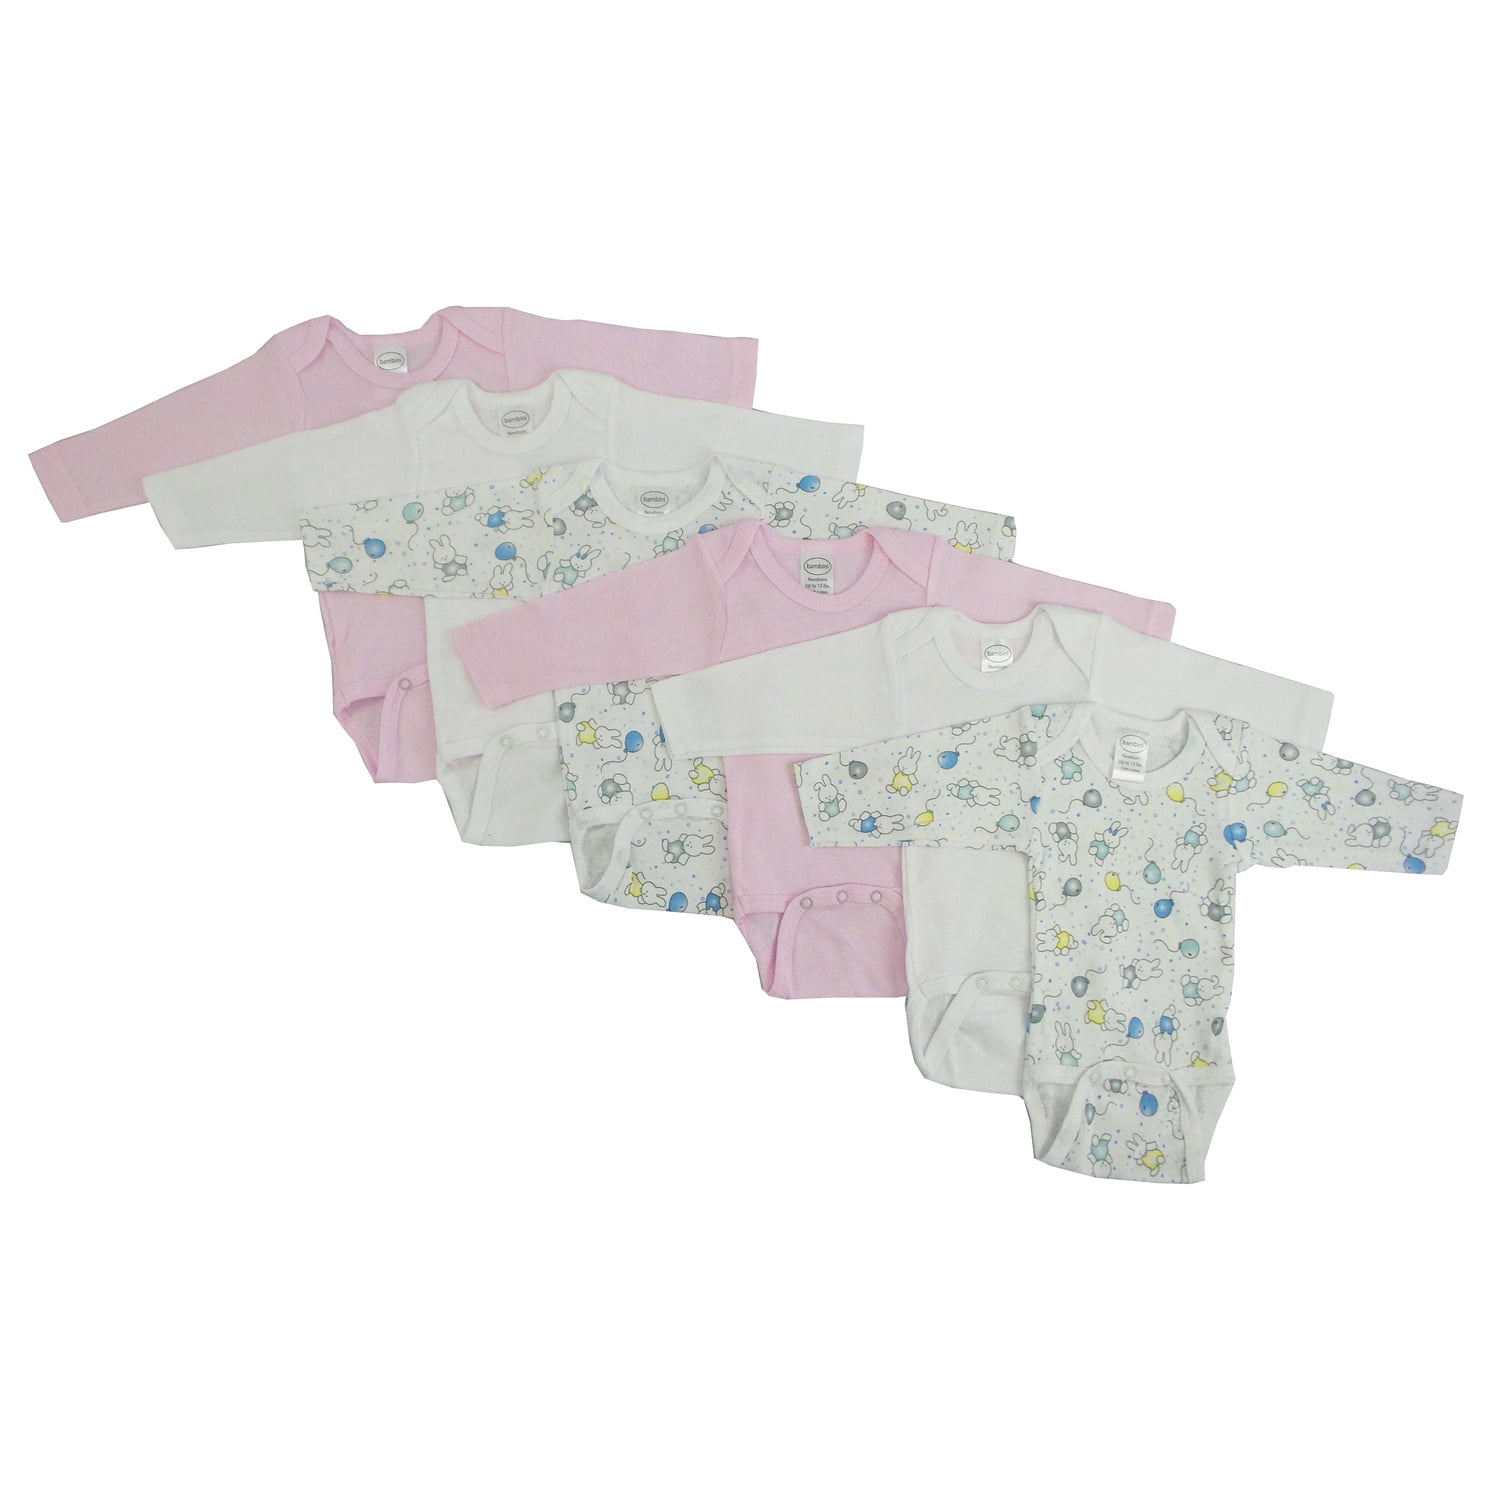 Cs-103l-103l Girls Long Sleeve Printed Variety, White & Pink - Large